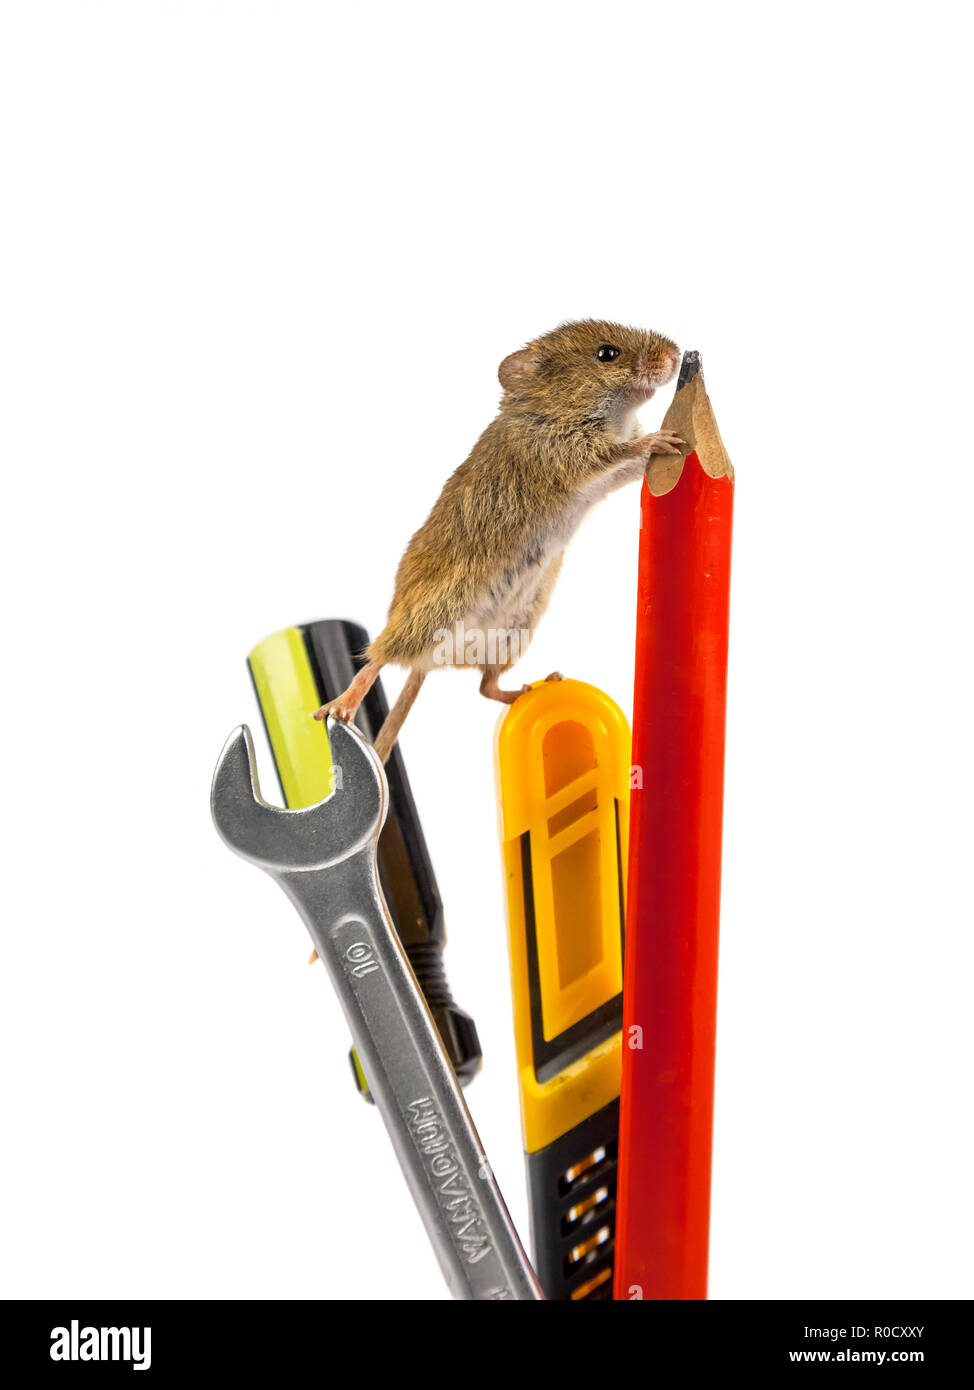 Harvest Mouse (Micromys minutus) climbing on repair tools, studio shot Stock Photo